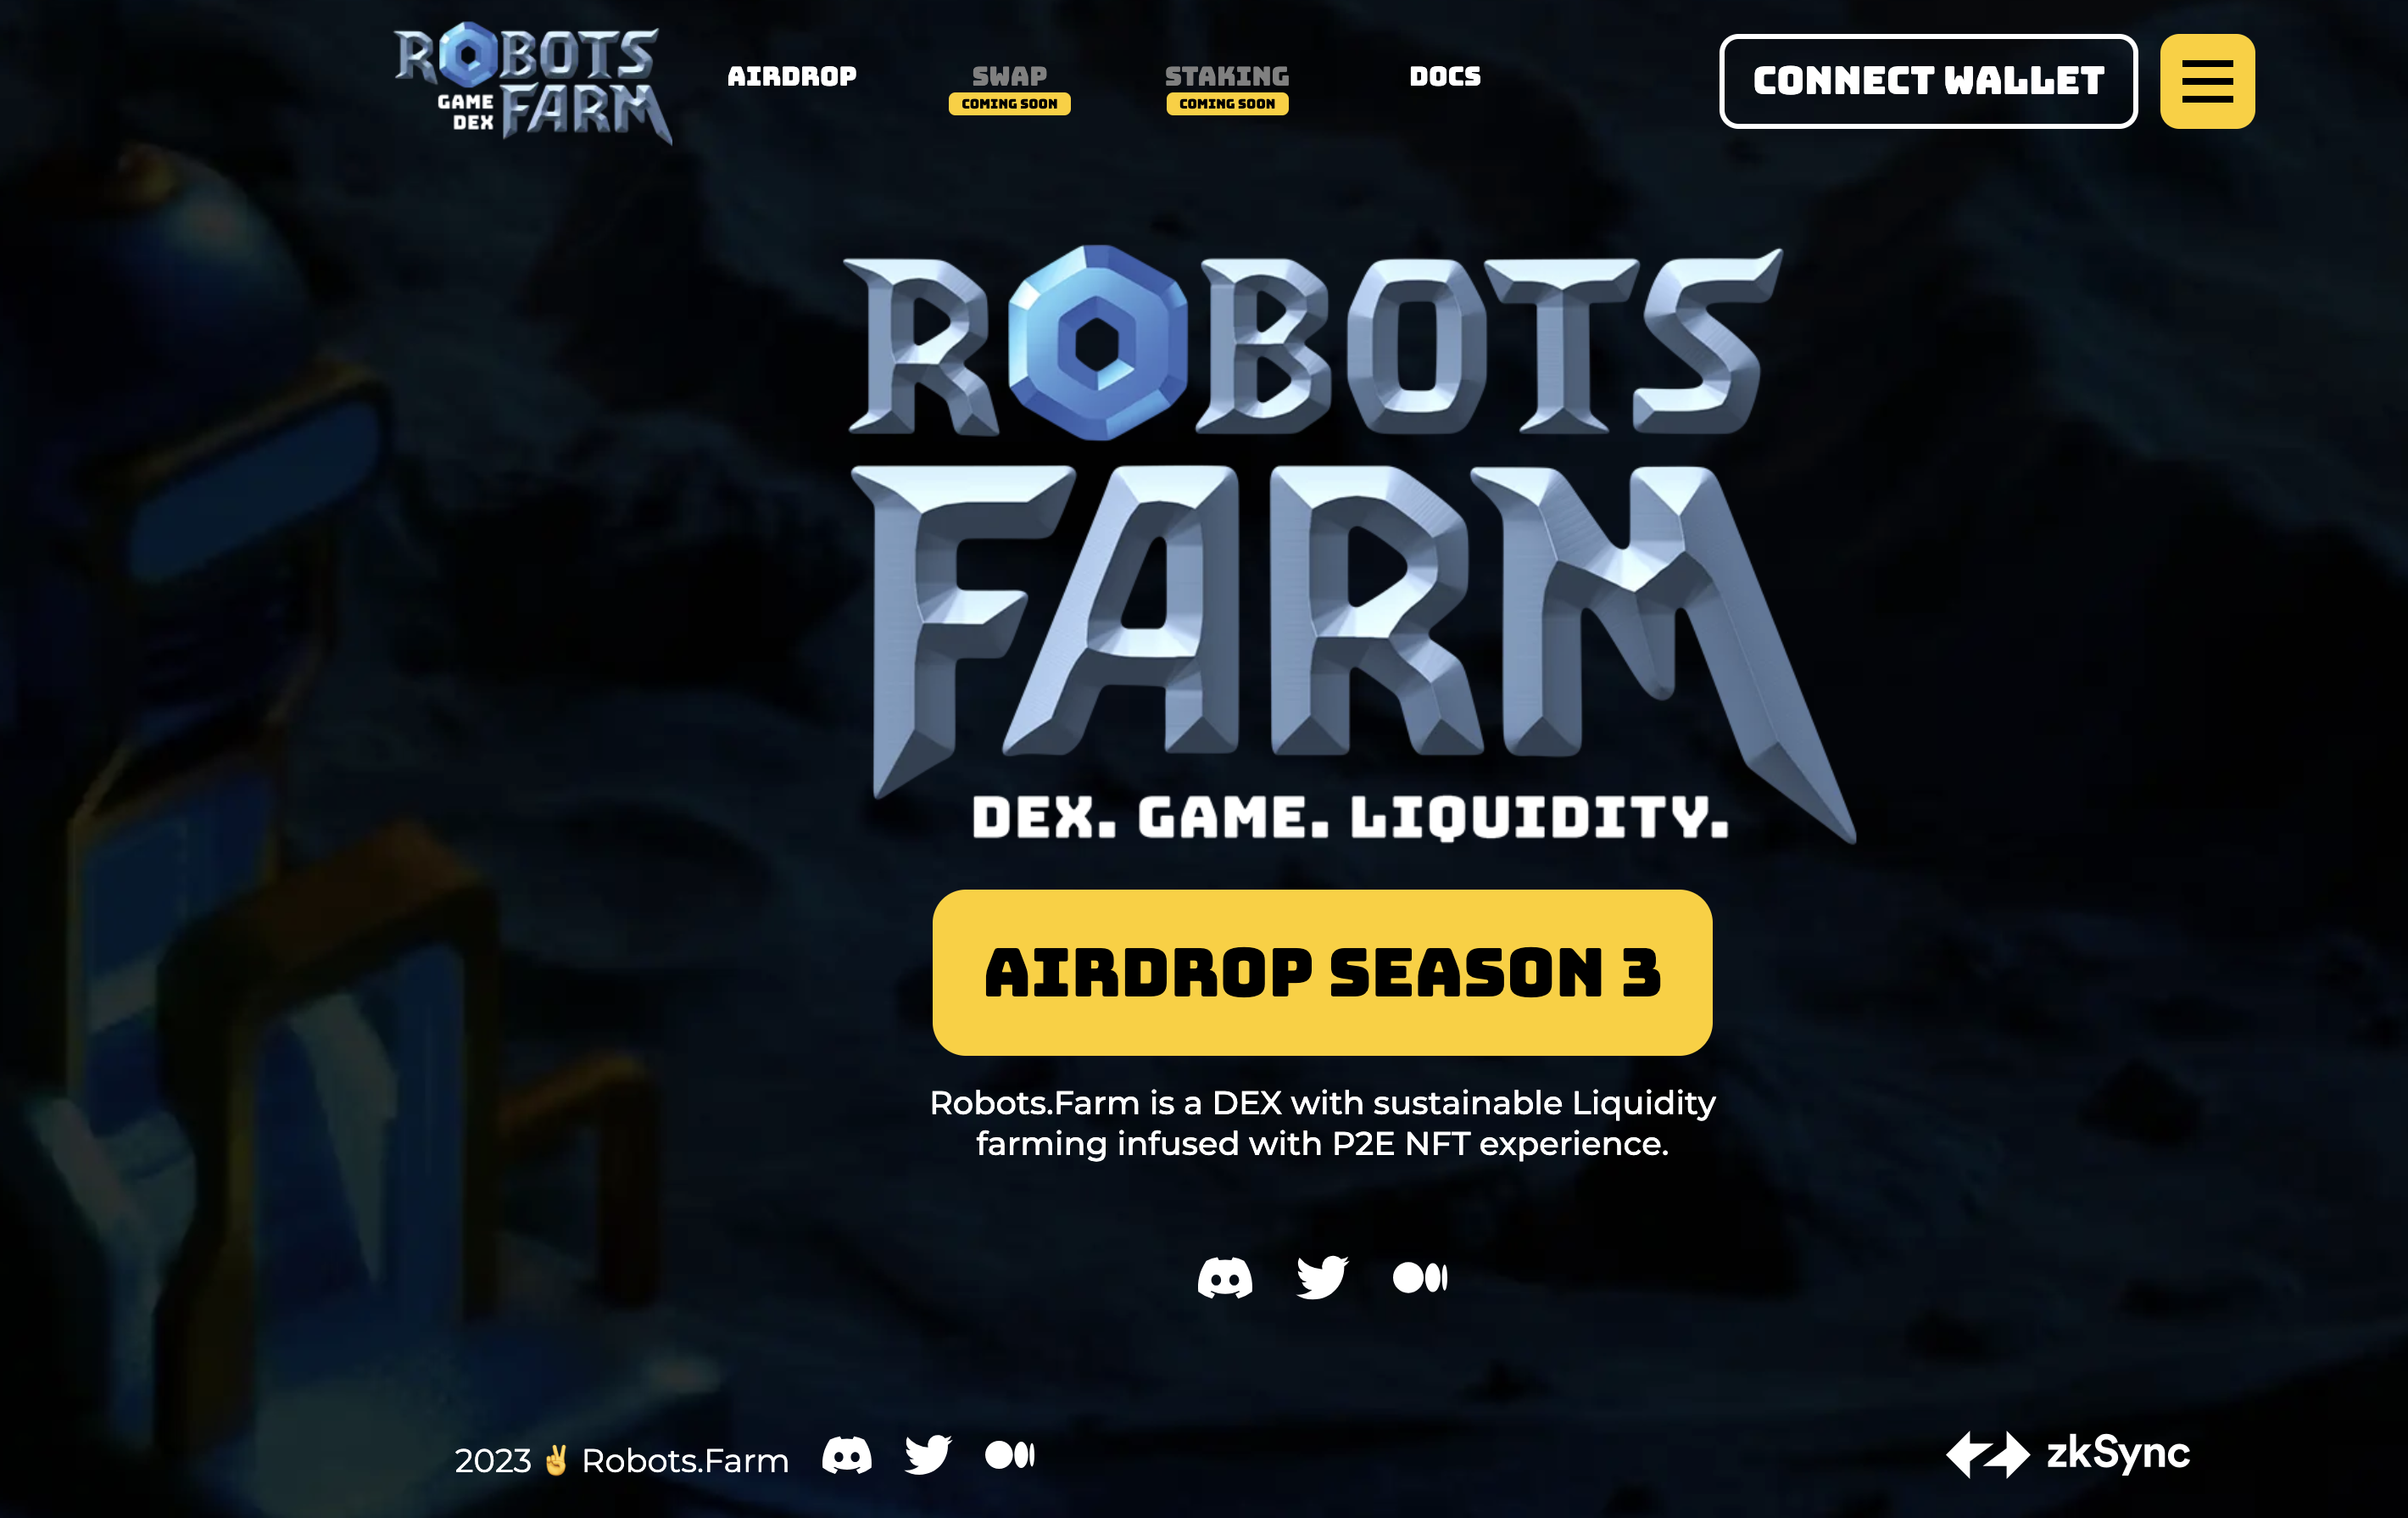 Robots Farm crypto gra na zkScync z potencjalem na airdrop